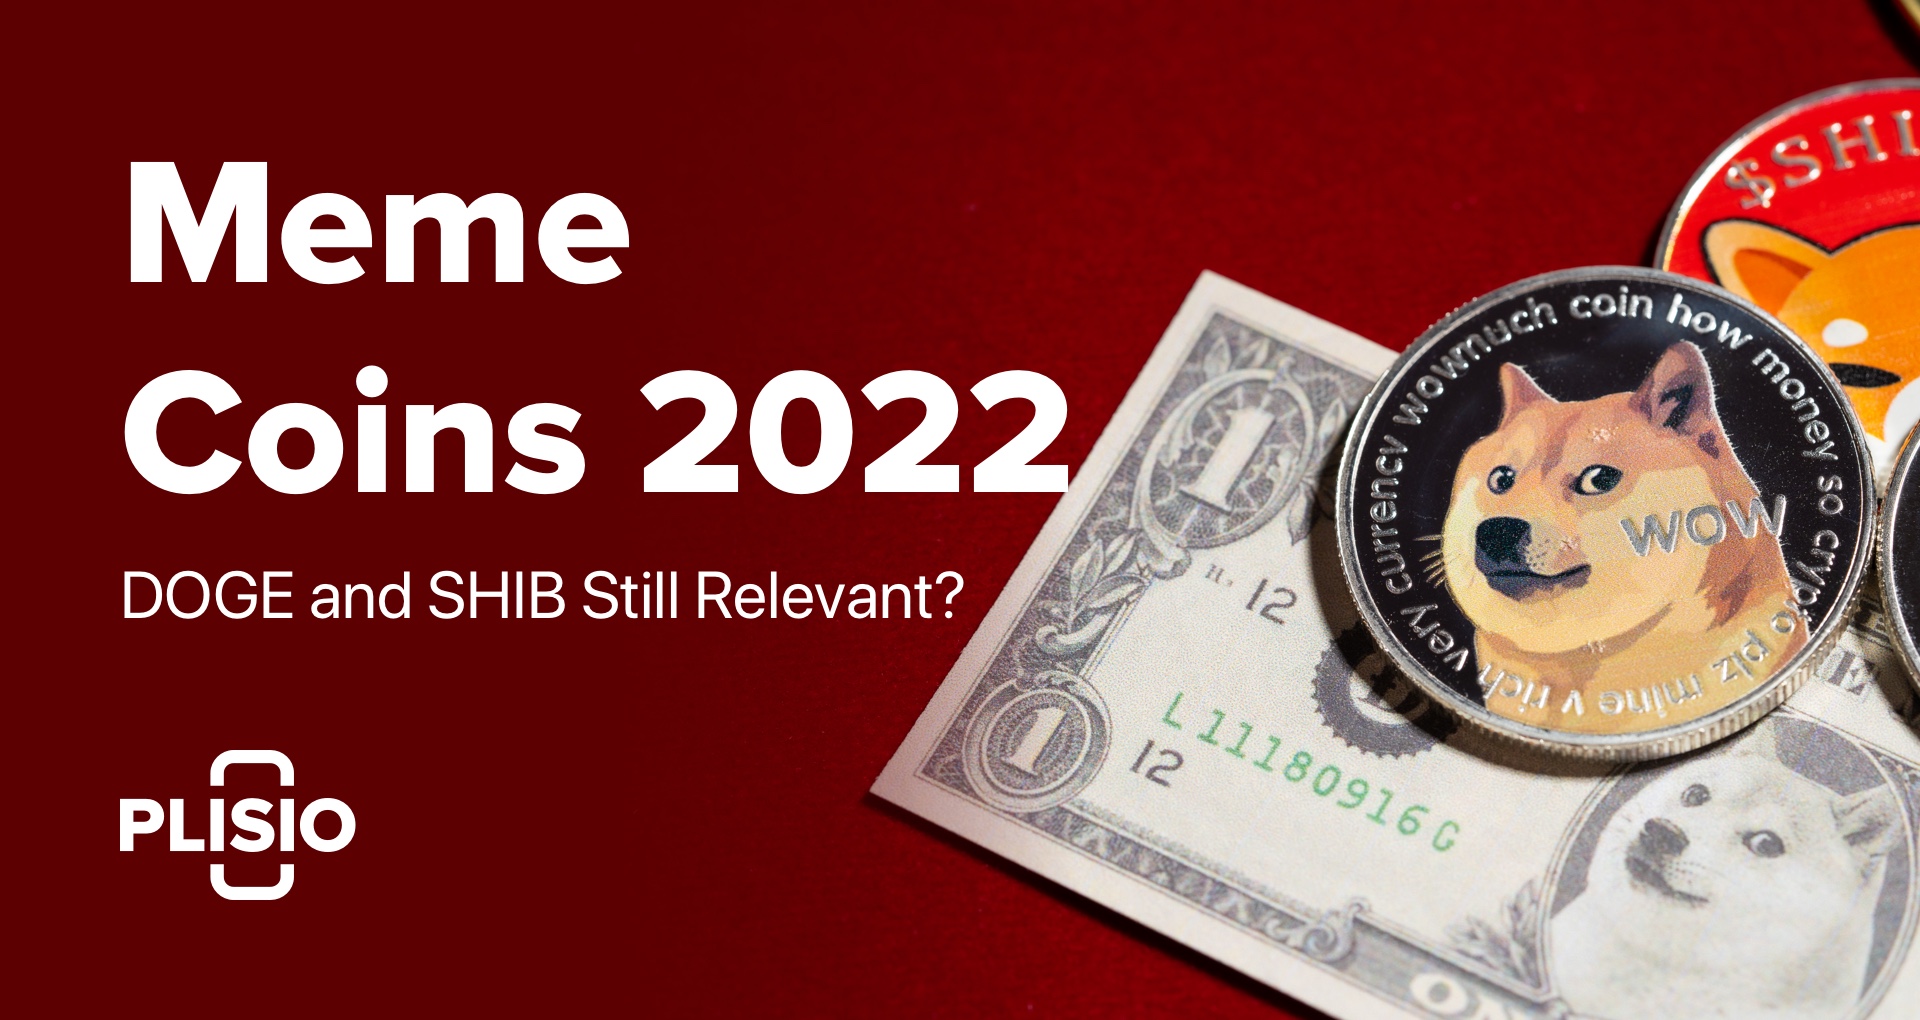 Meme Coins το 2022: Τα Dogecoin και Shiba Inu εξακολουθούν να είναι σχετικά;